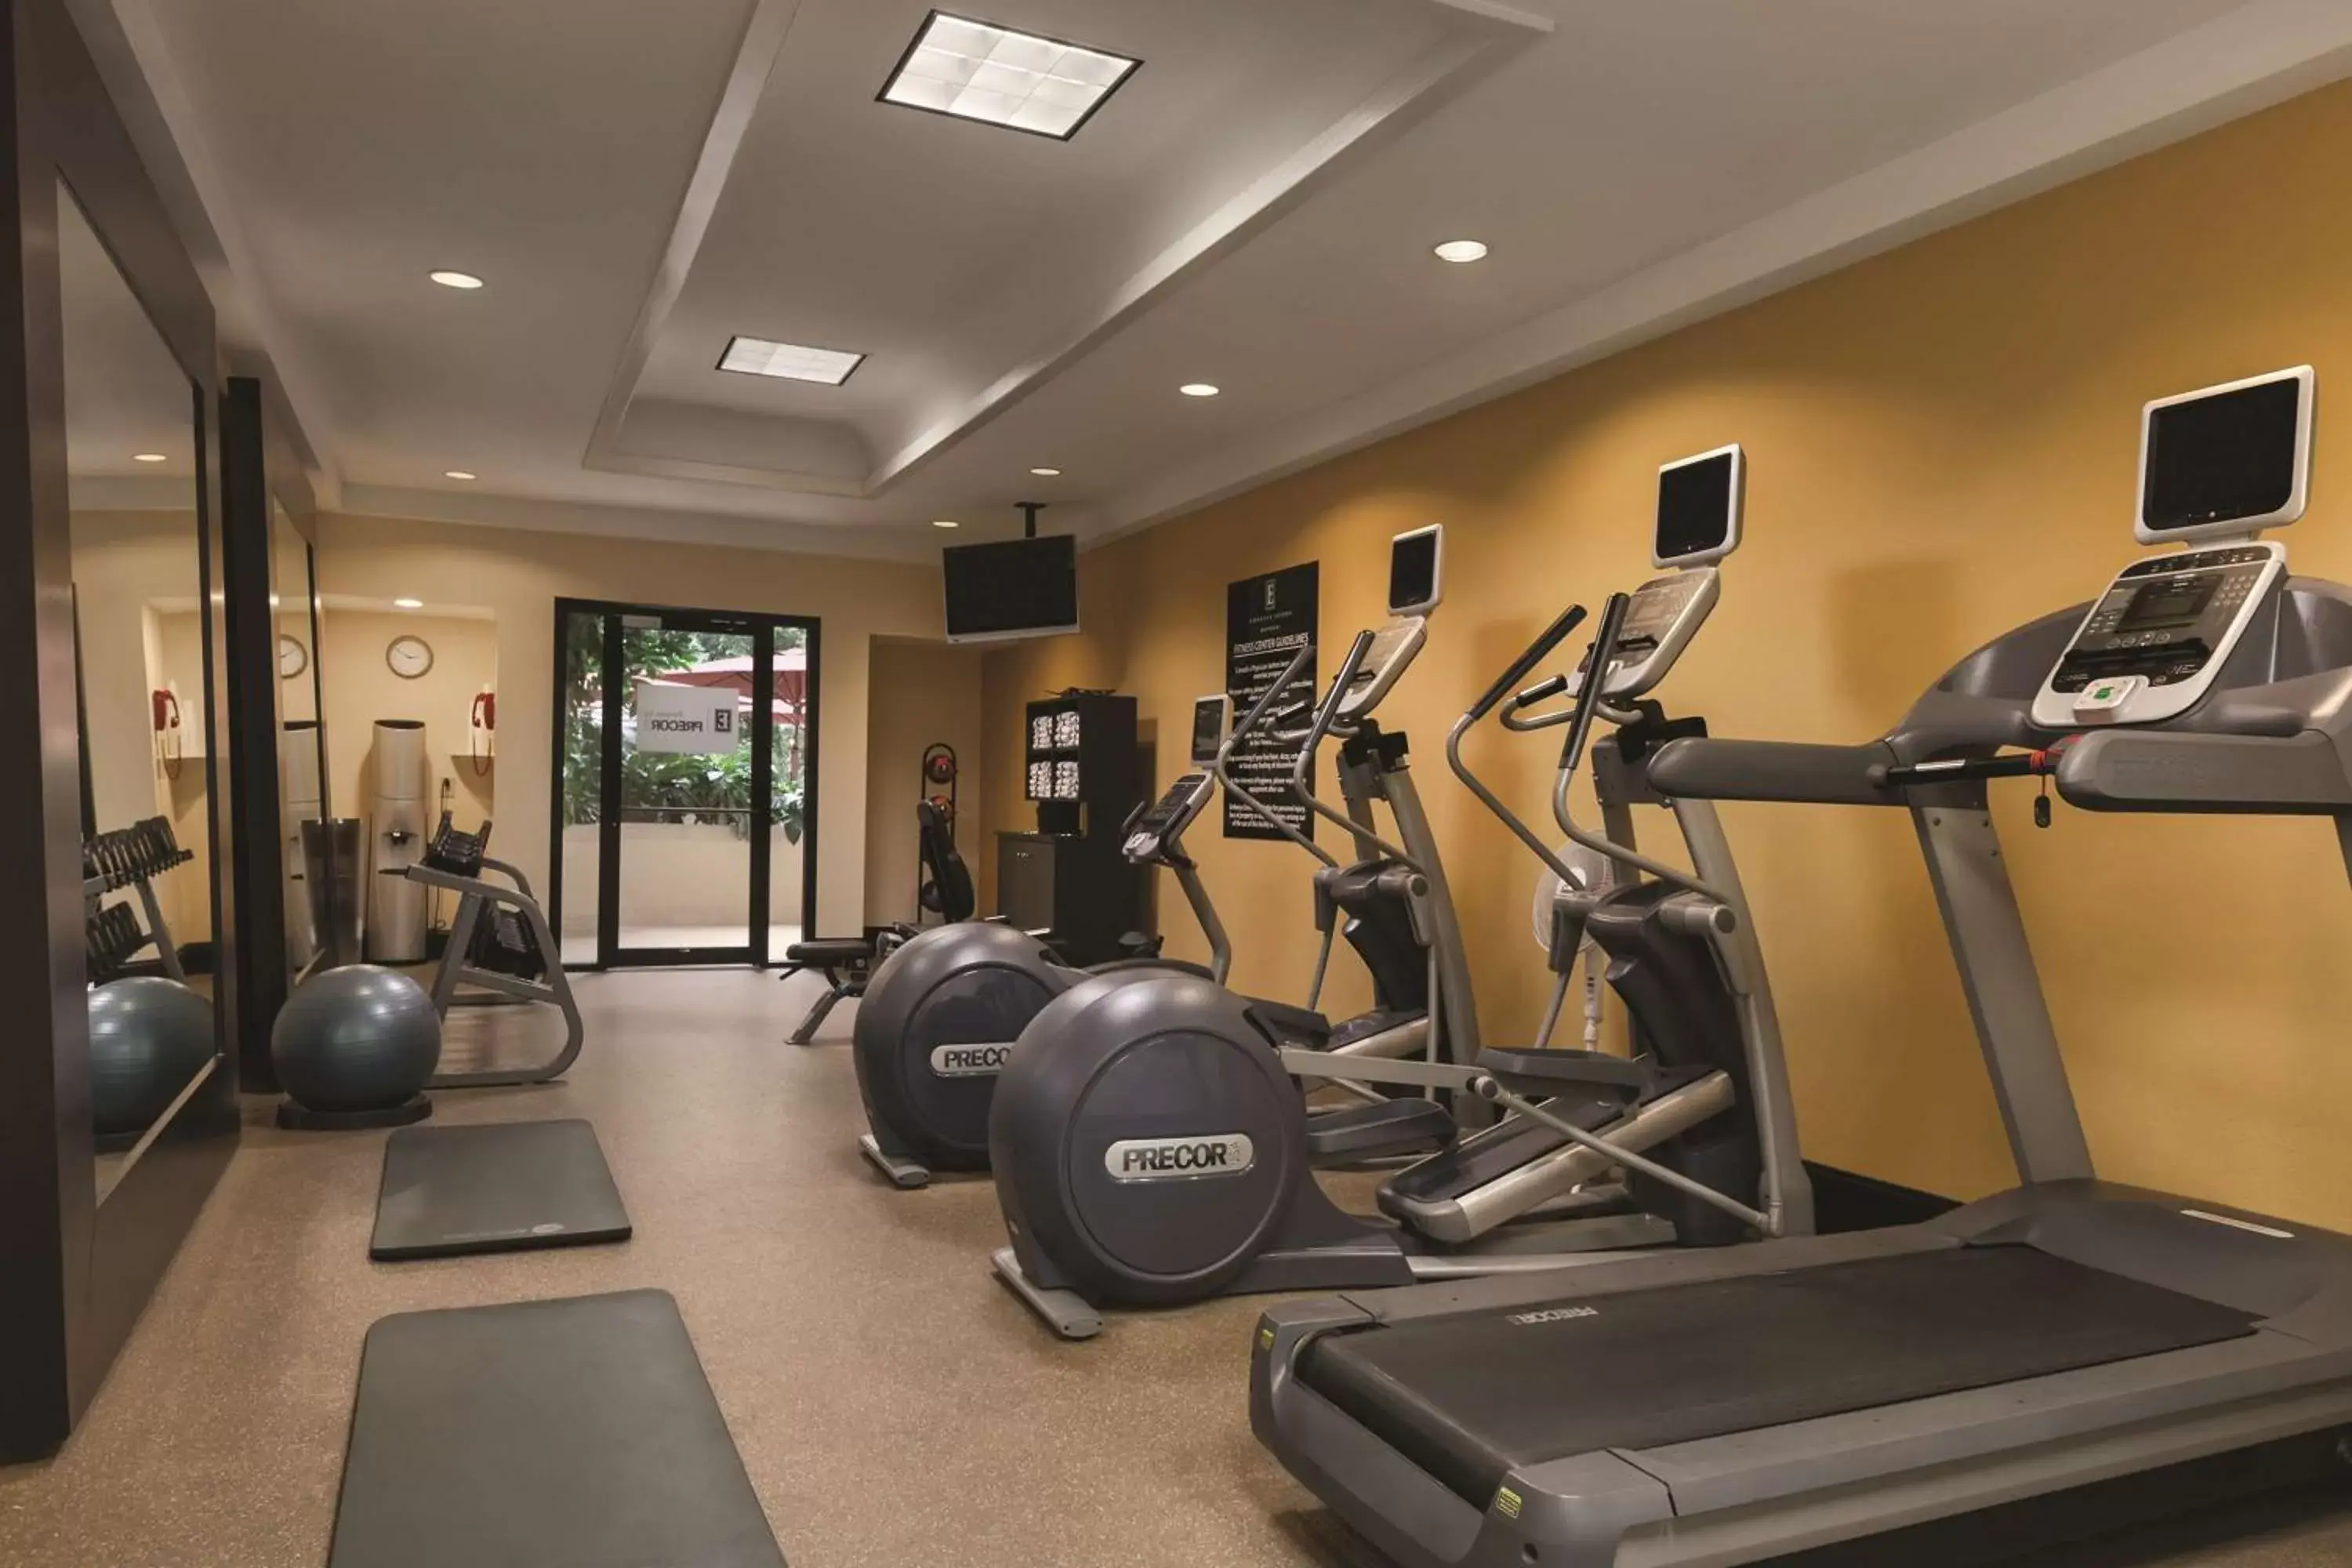 Fitness centre/facilities, Fitness Center/Facilities in Embassy Suites Birmingham